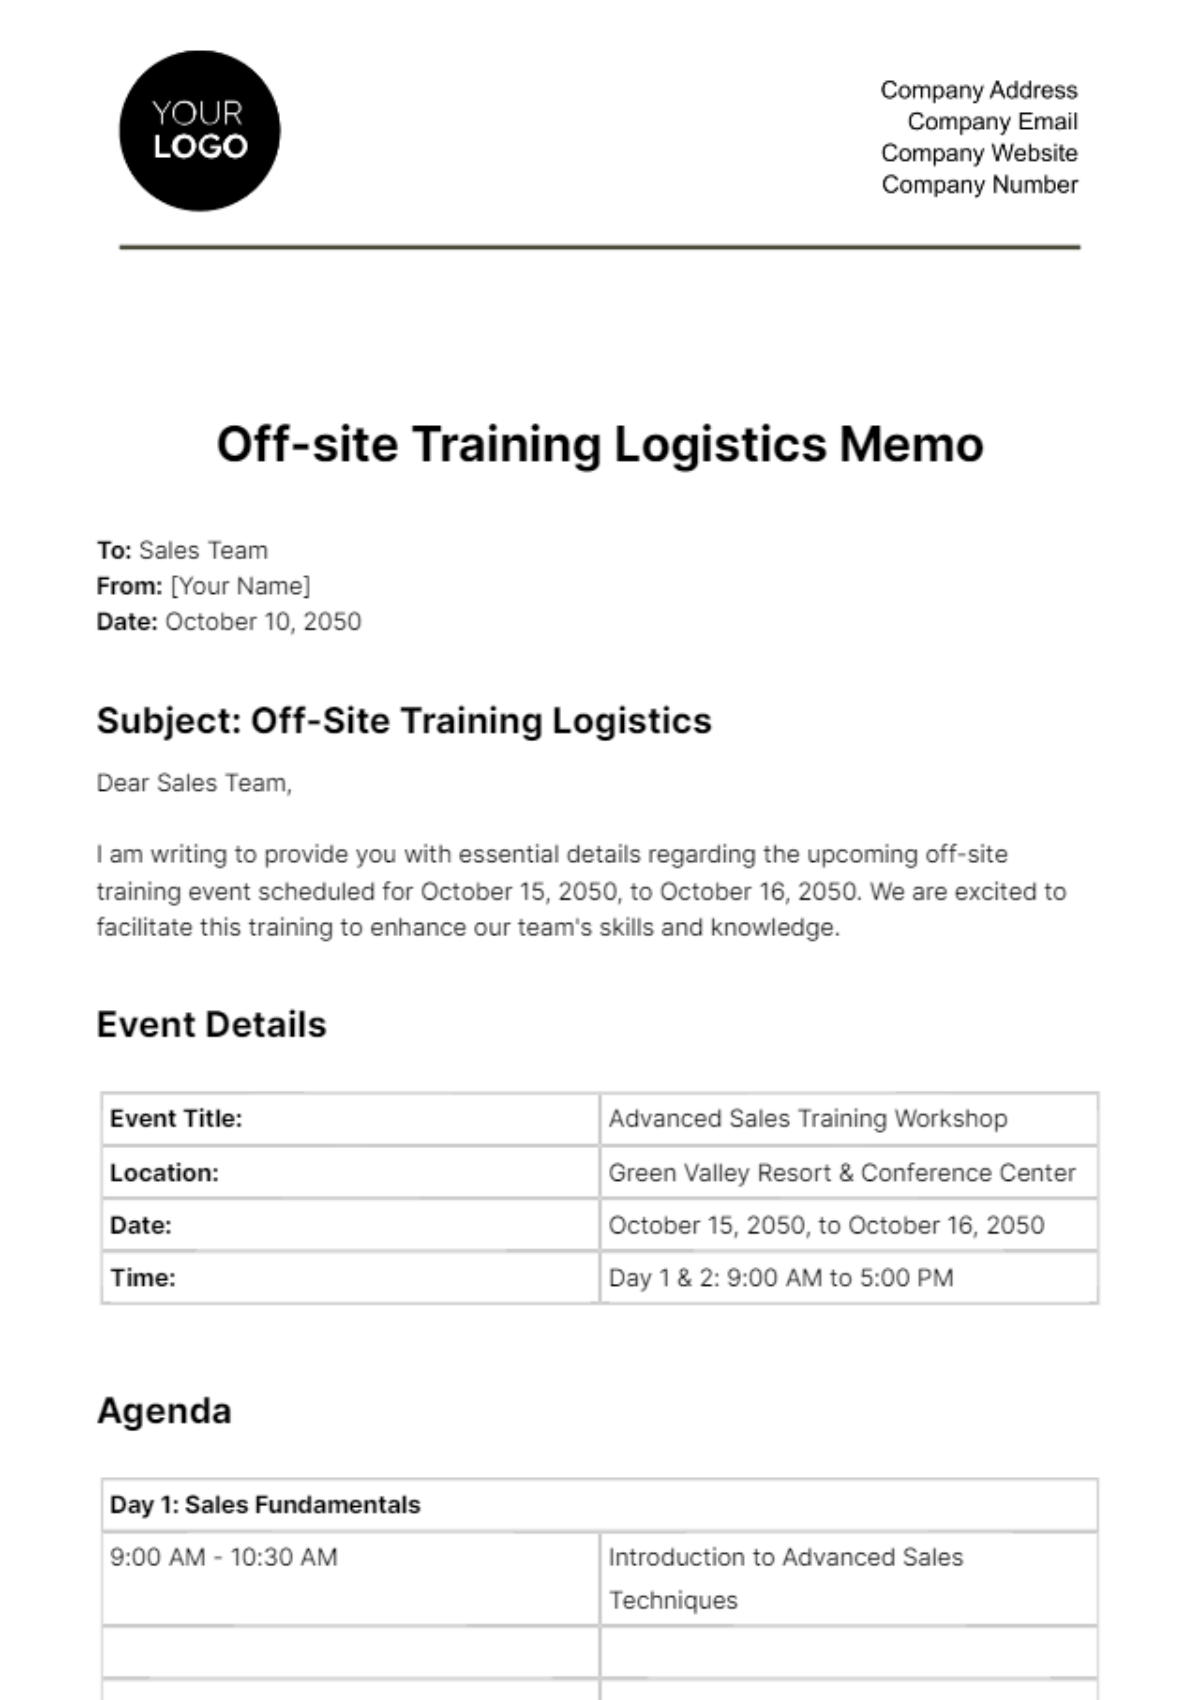 Free Off-site Training Logistics Memo HR Template